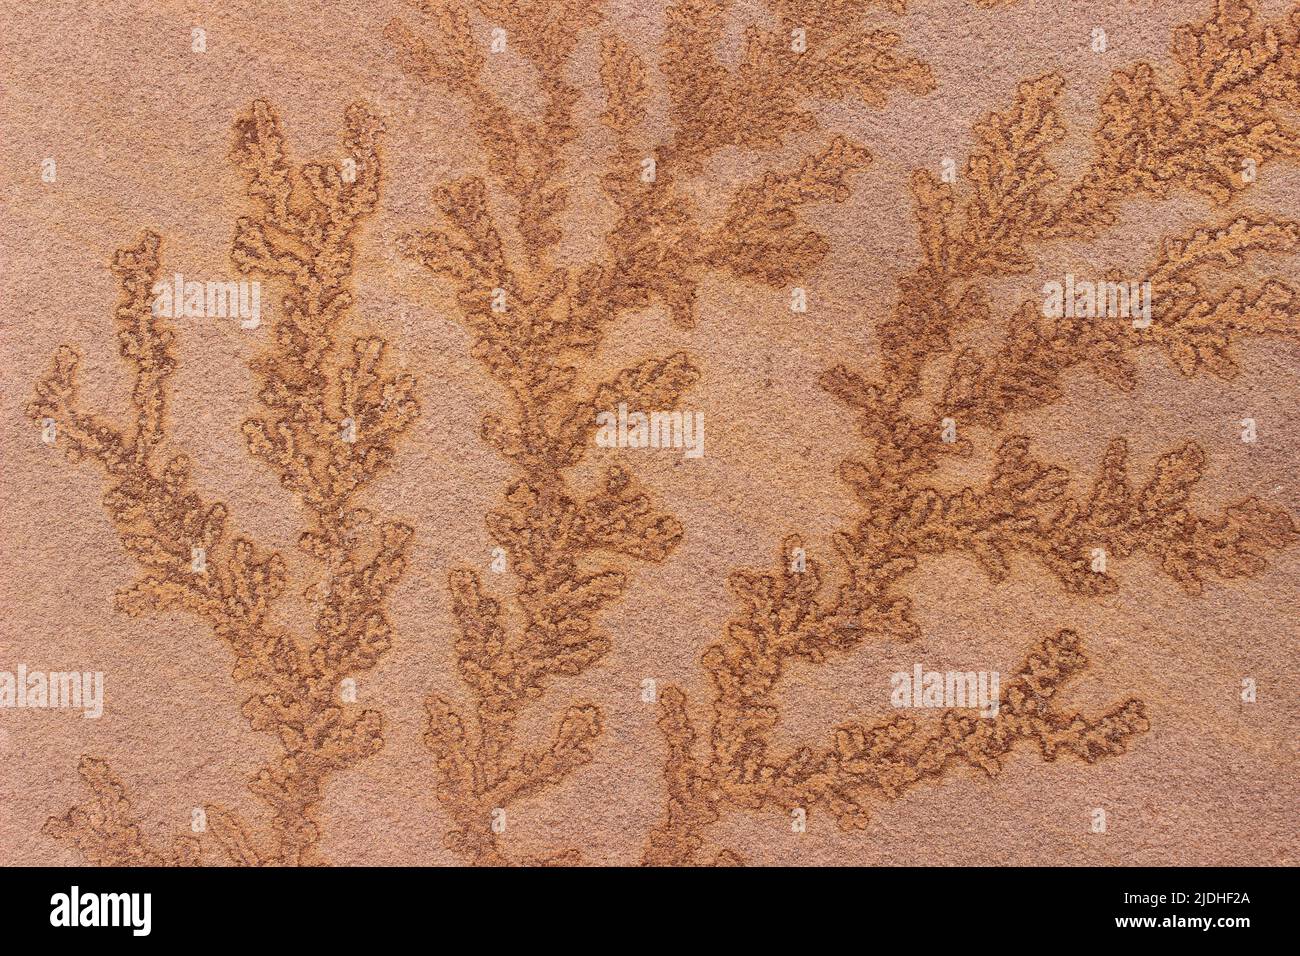 Dendritic Pattern In Sandstone Stock Photo